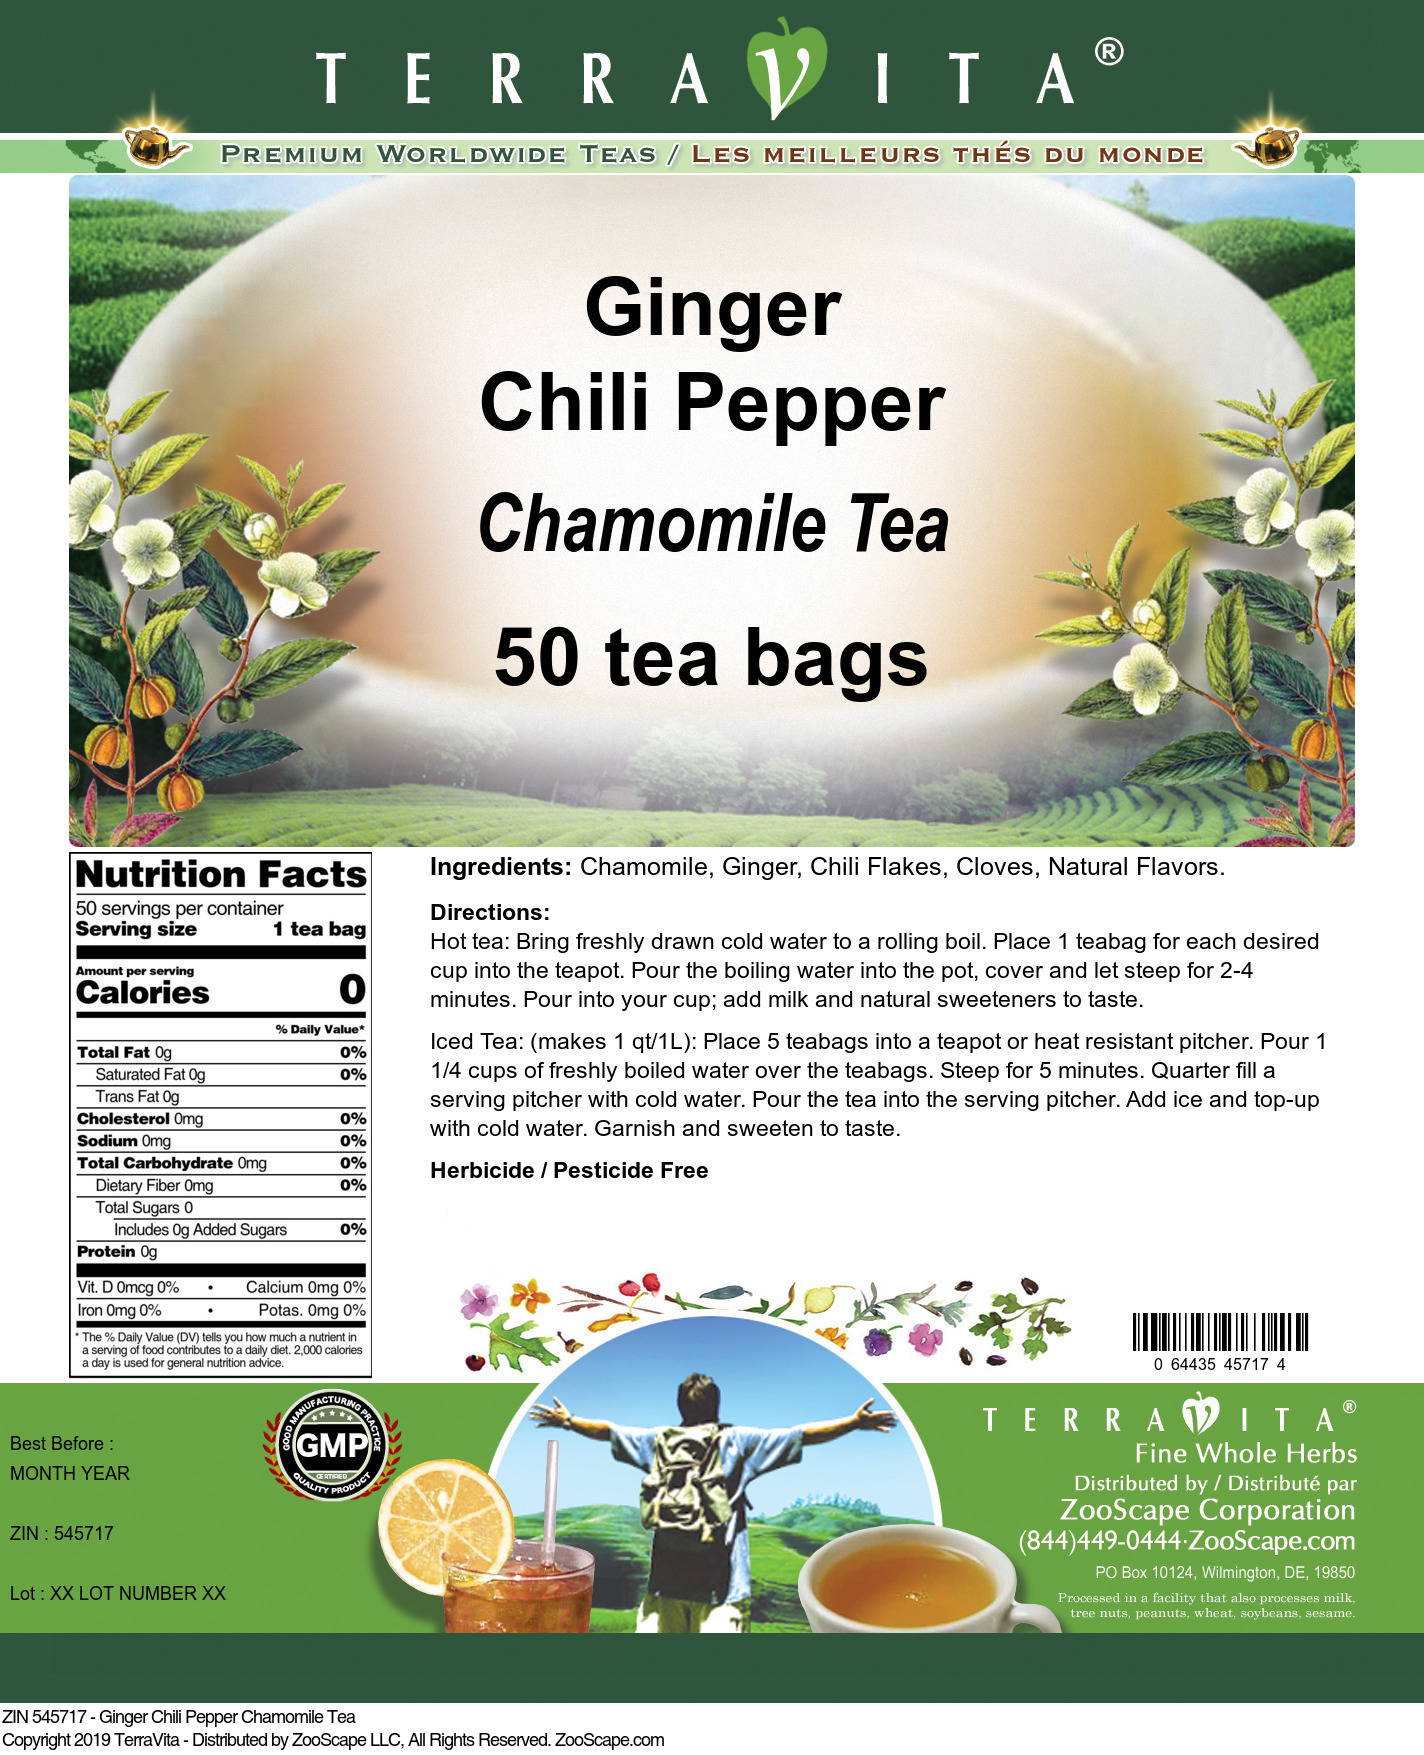 Ginger Chili Pepper Chamomile Tea - Label